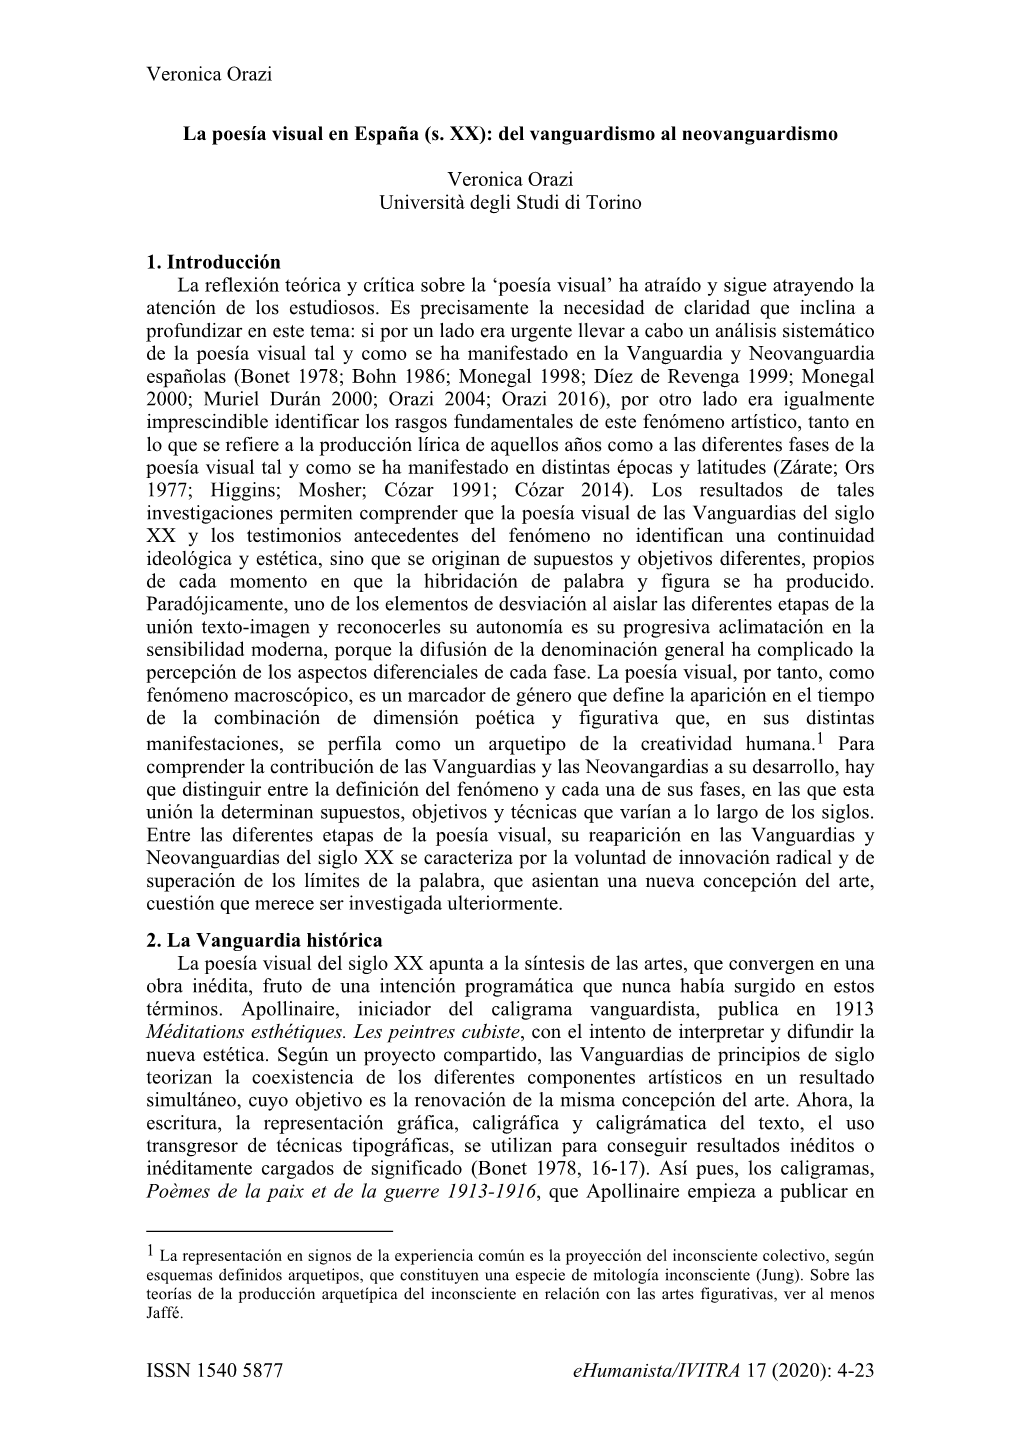 Veronica Orazi ISSN 1540 5877 Ehumanista/IVITRA 17 (2020): 4-23